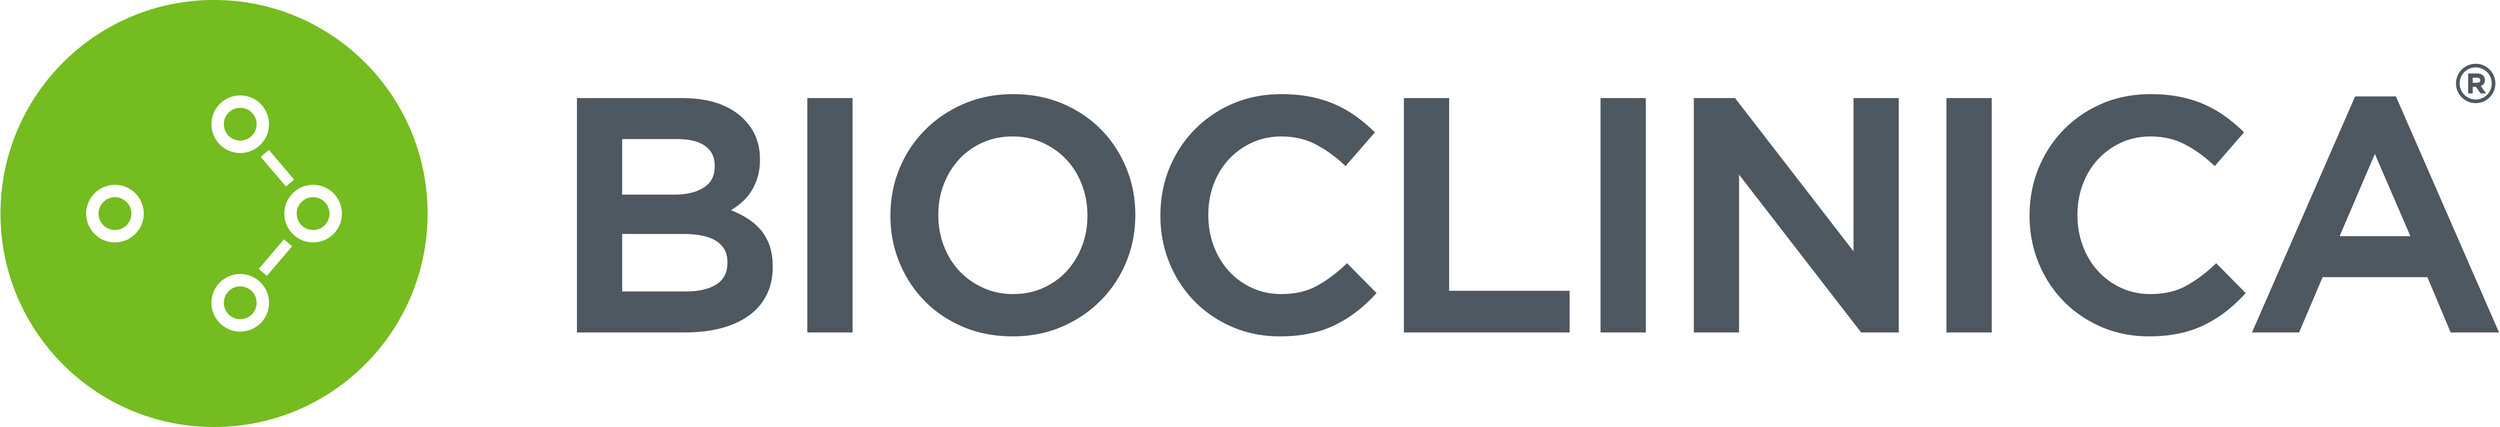 Bioclinica Logo.jpg